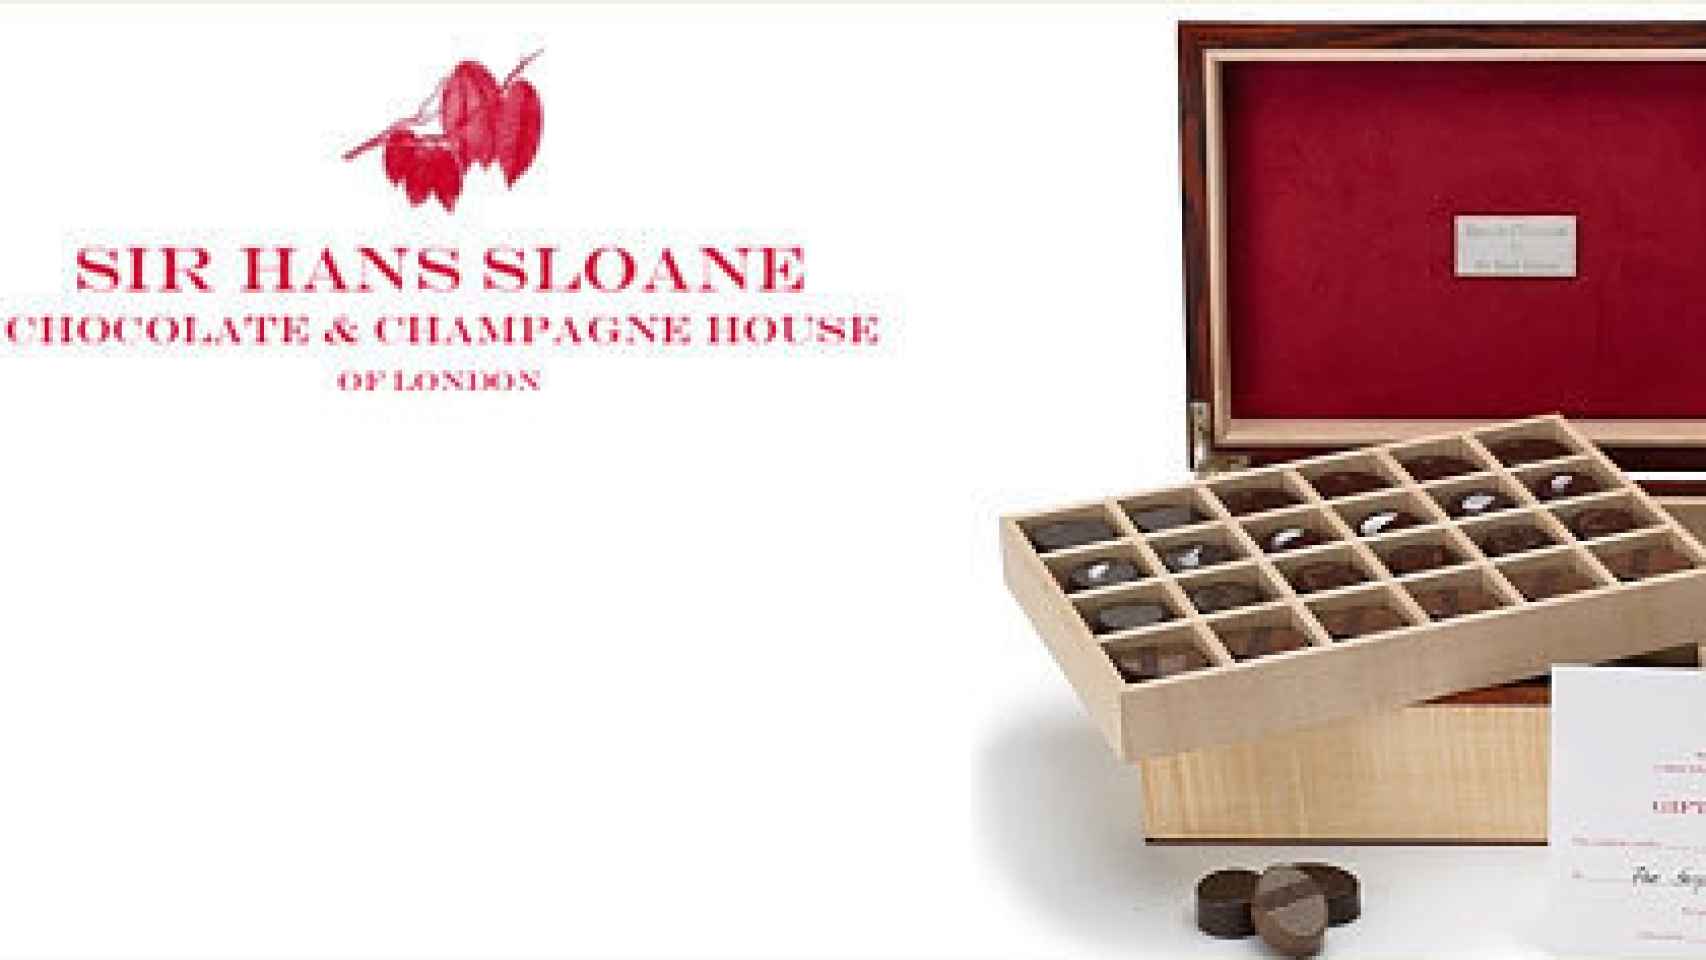 Caja de 60 unidades de Sir Hans Sloane Chocolate & Champagne House.